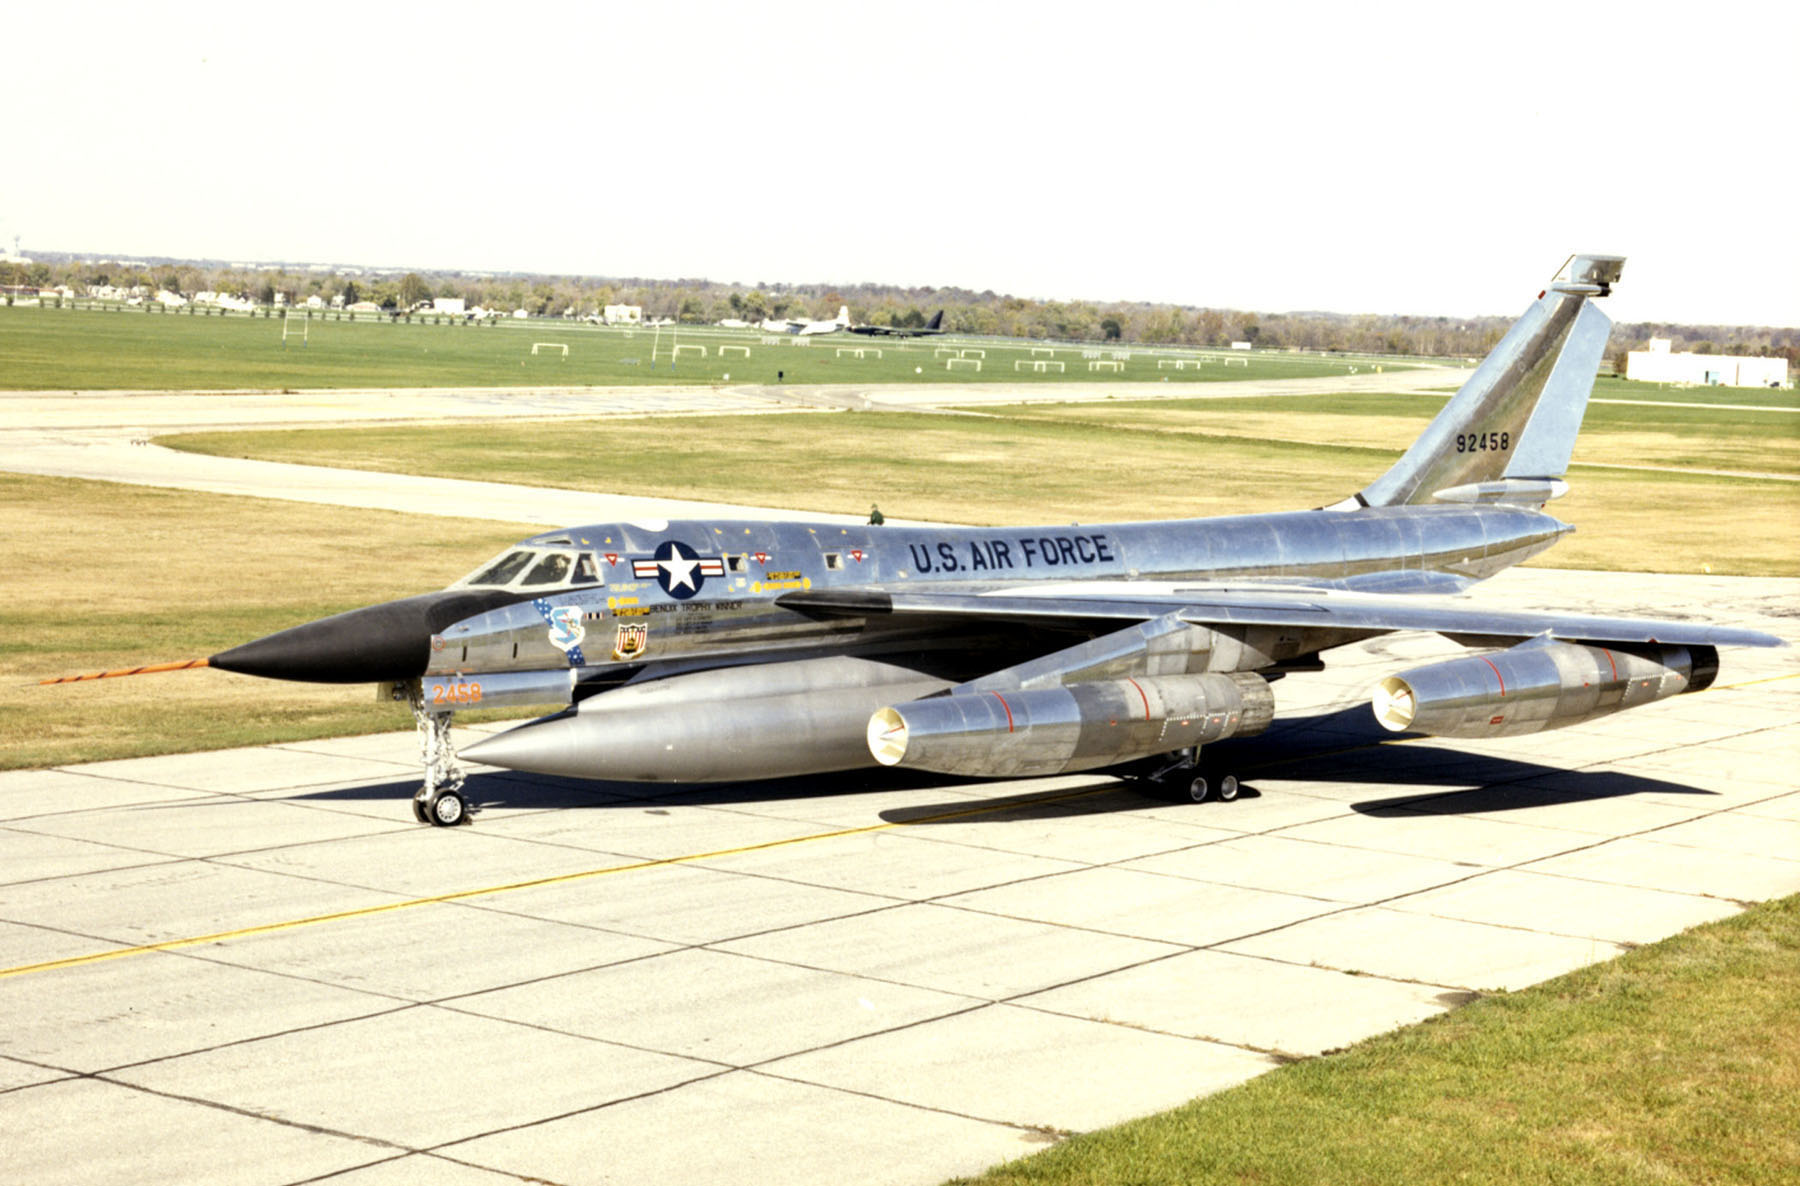 File:Convair B-58 Hustler USAF.jpg - Wikipedia